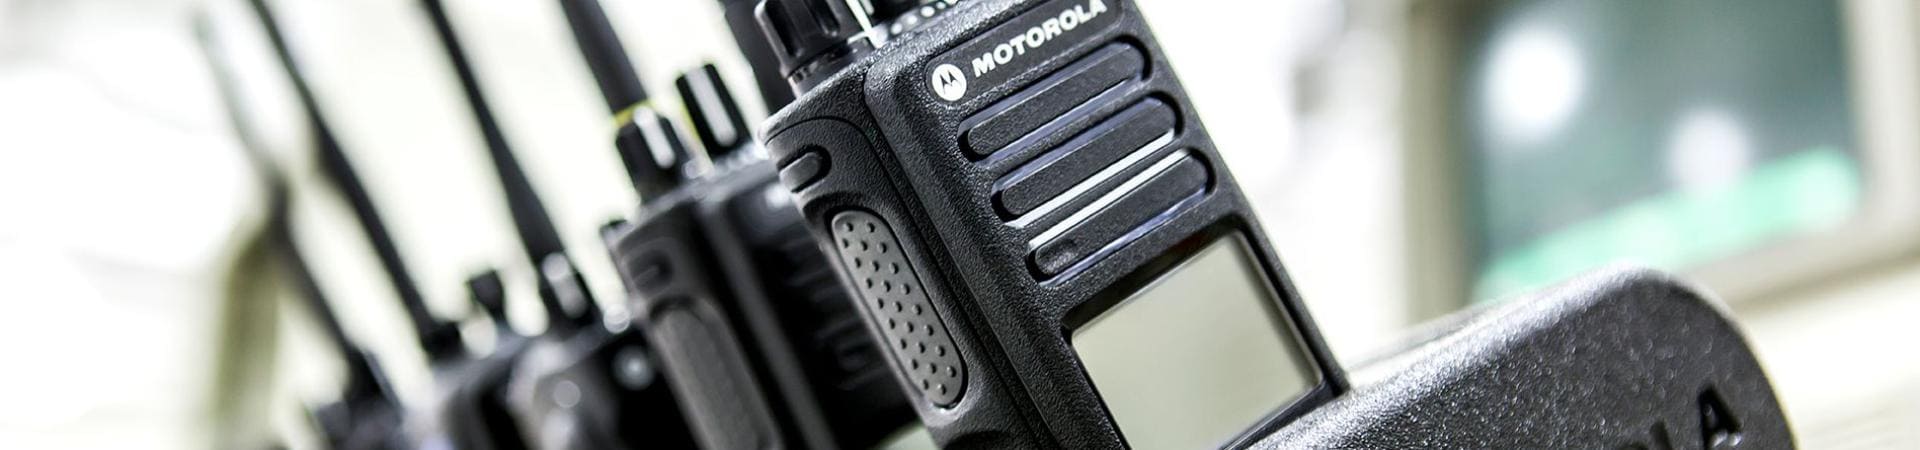 Rádio comunicador Motorola